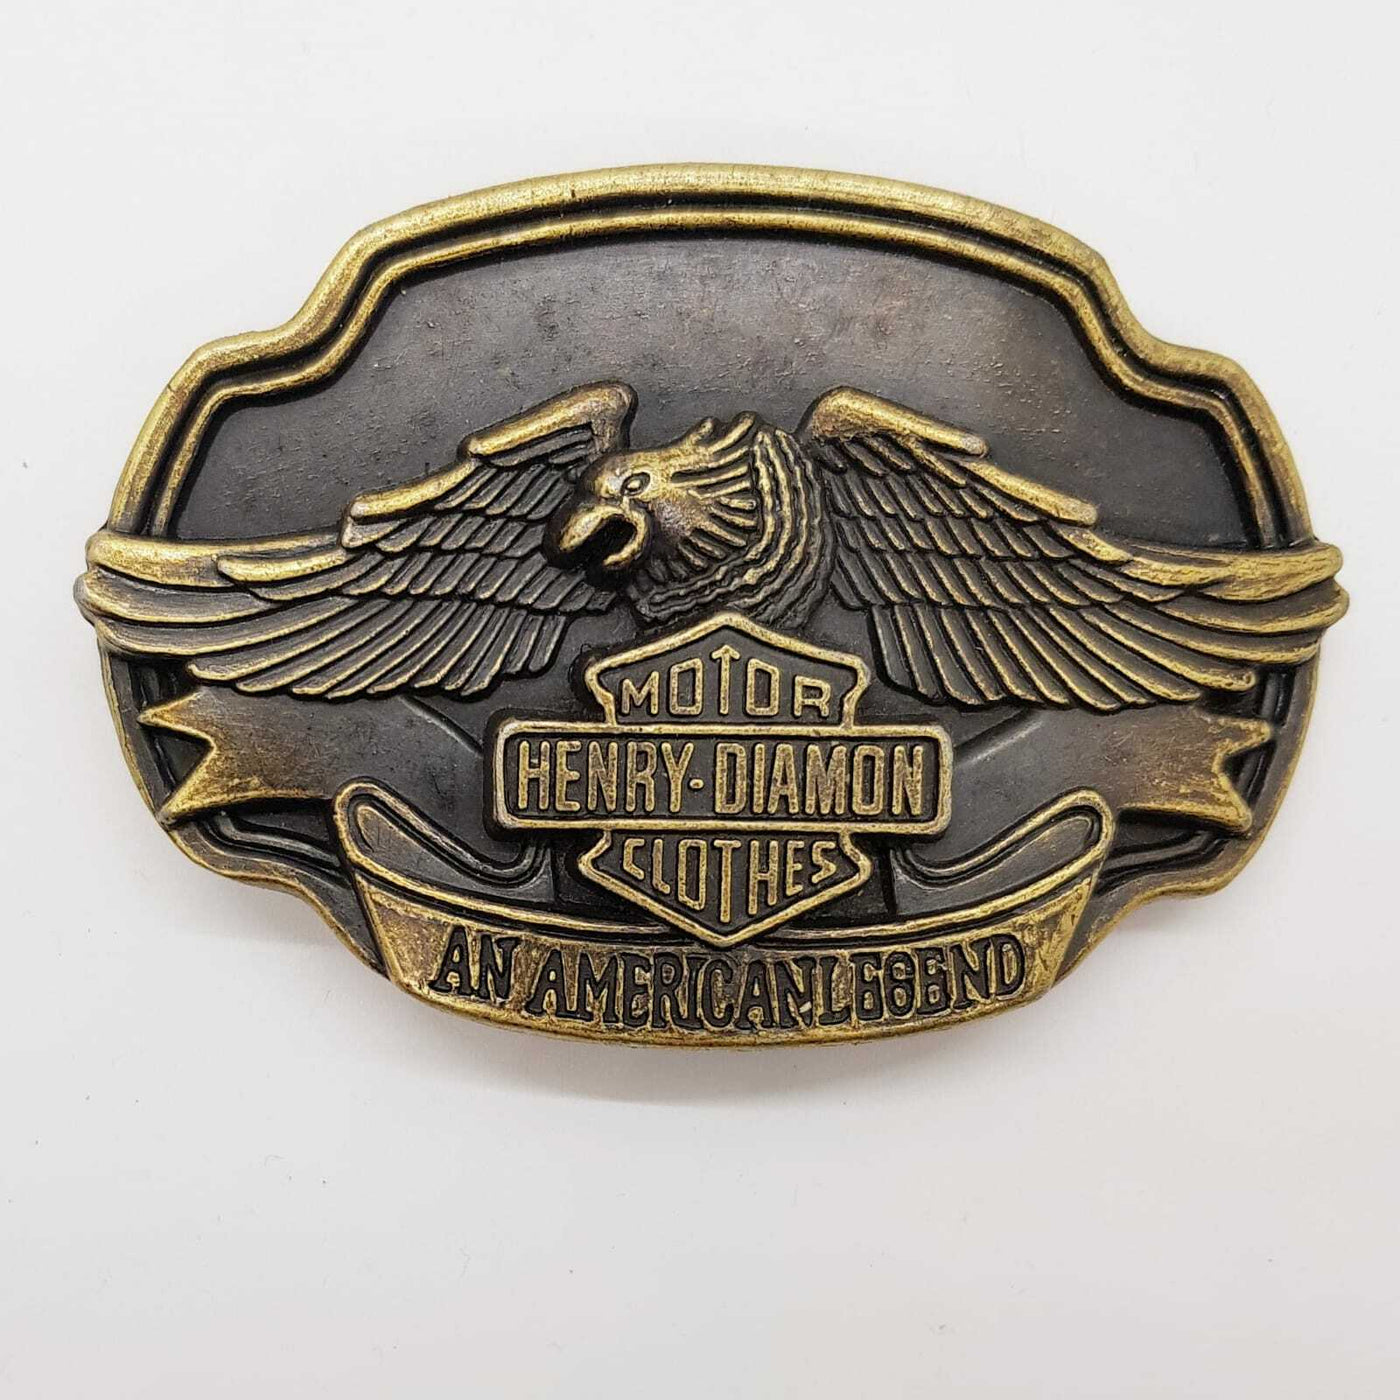 Motor Henry-diamon Clothes Belt Buckle Biker Golden Eagle American feeanddave